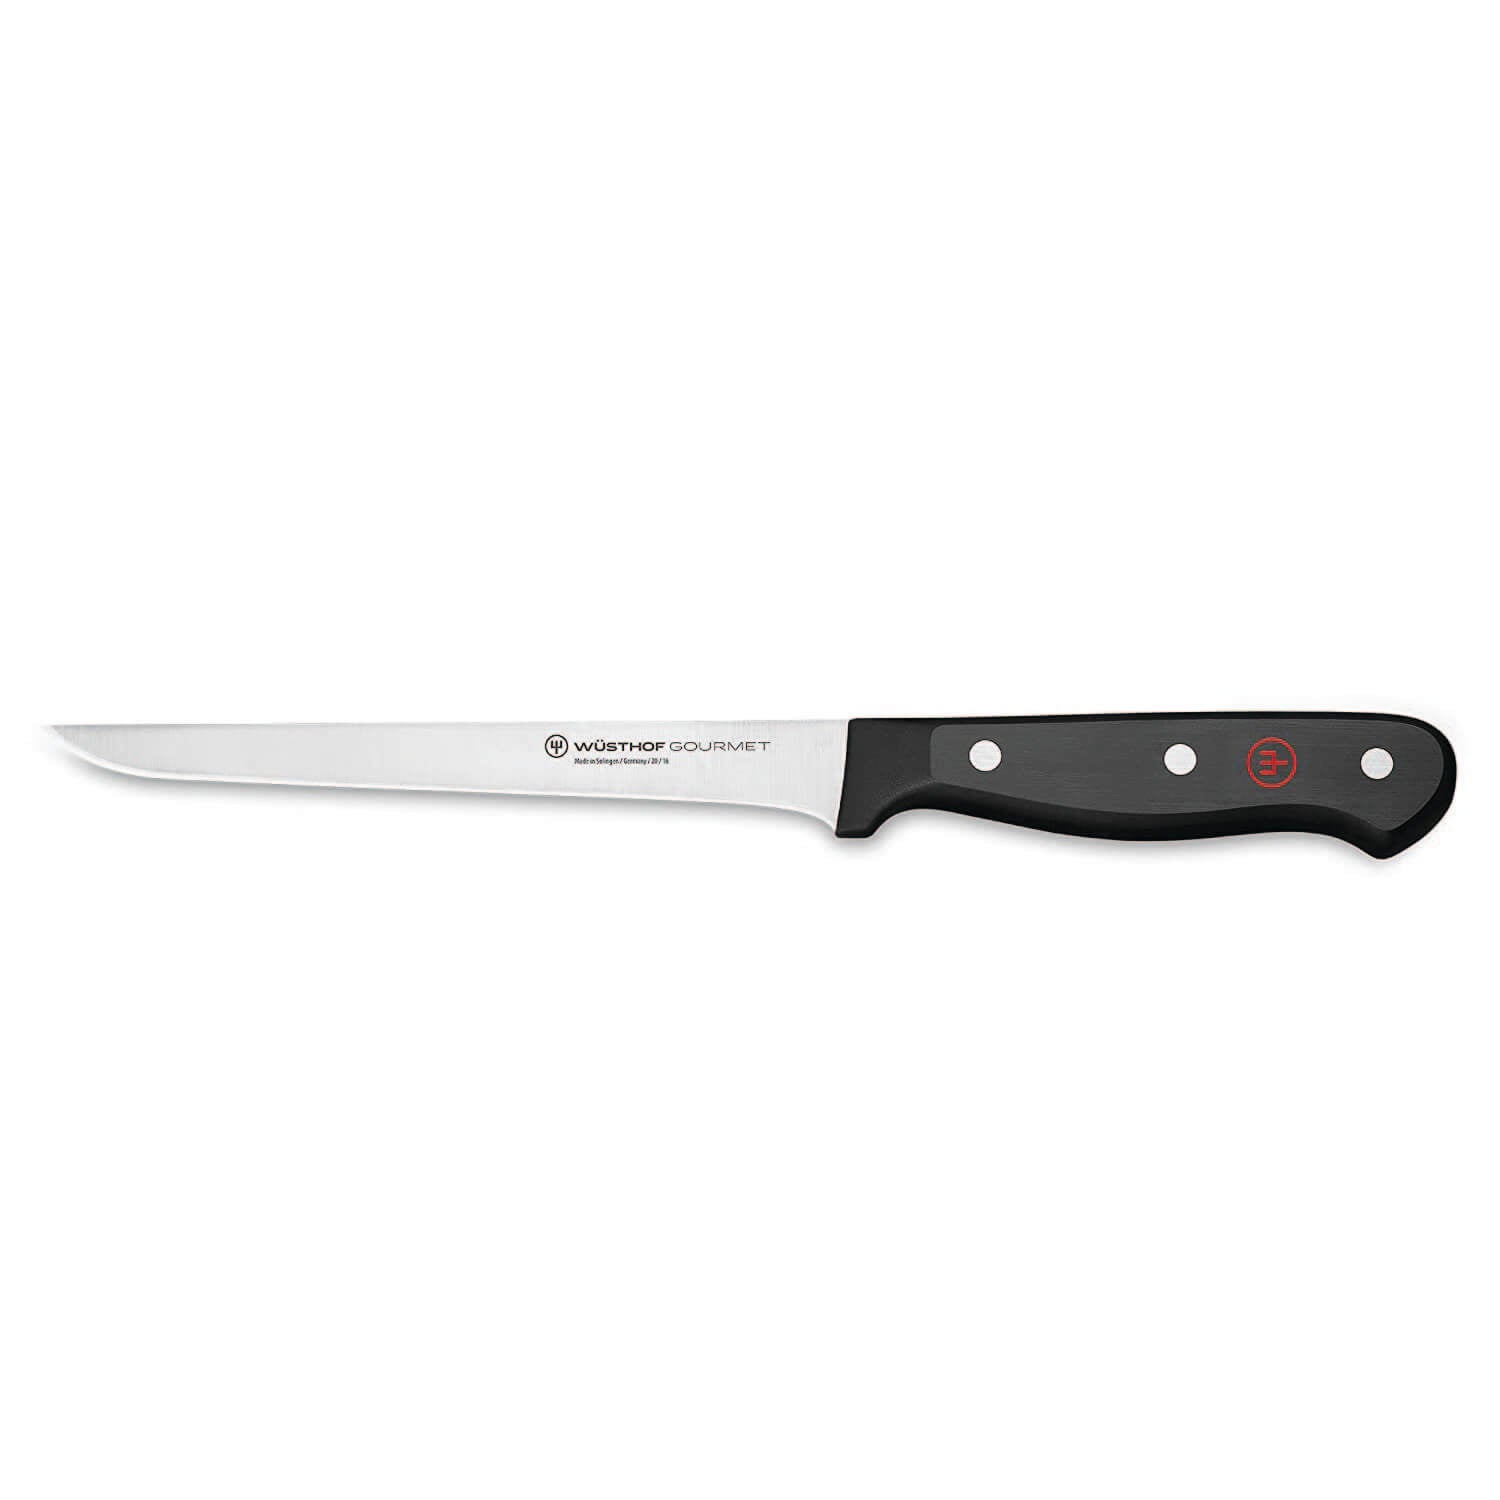 Ausbeinmesser / Boning knife 14 cm Classic